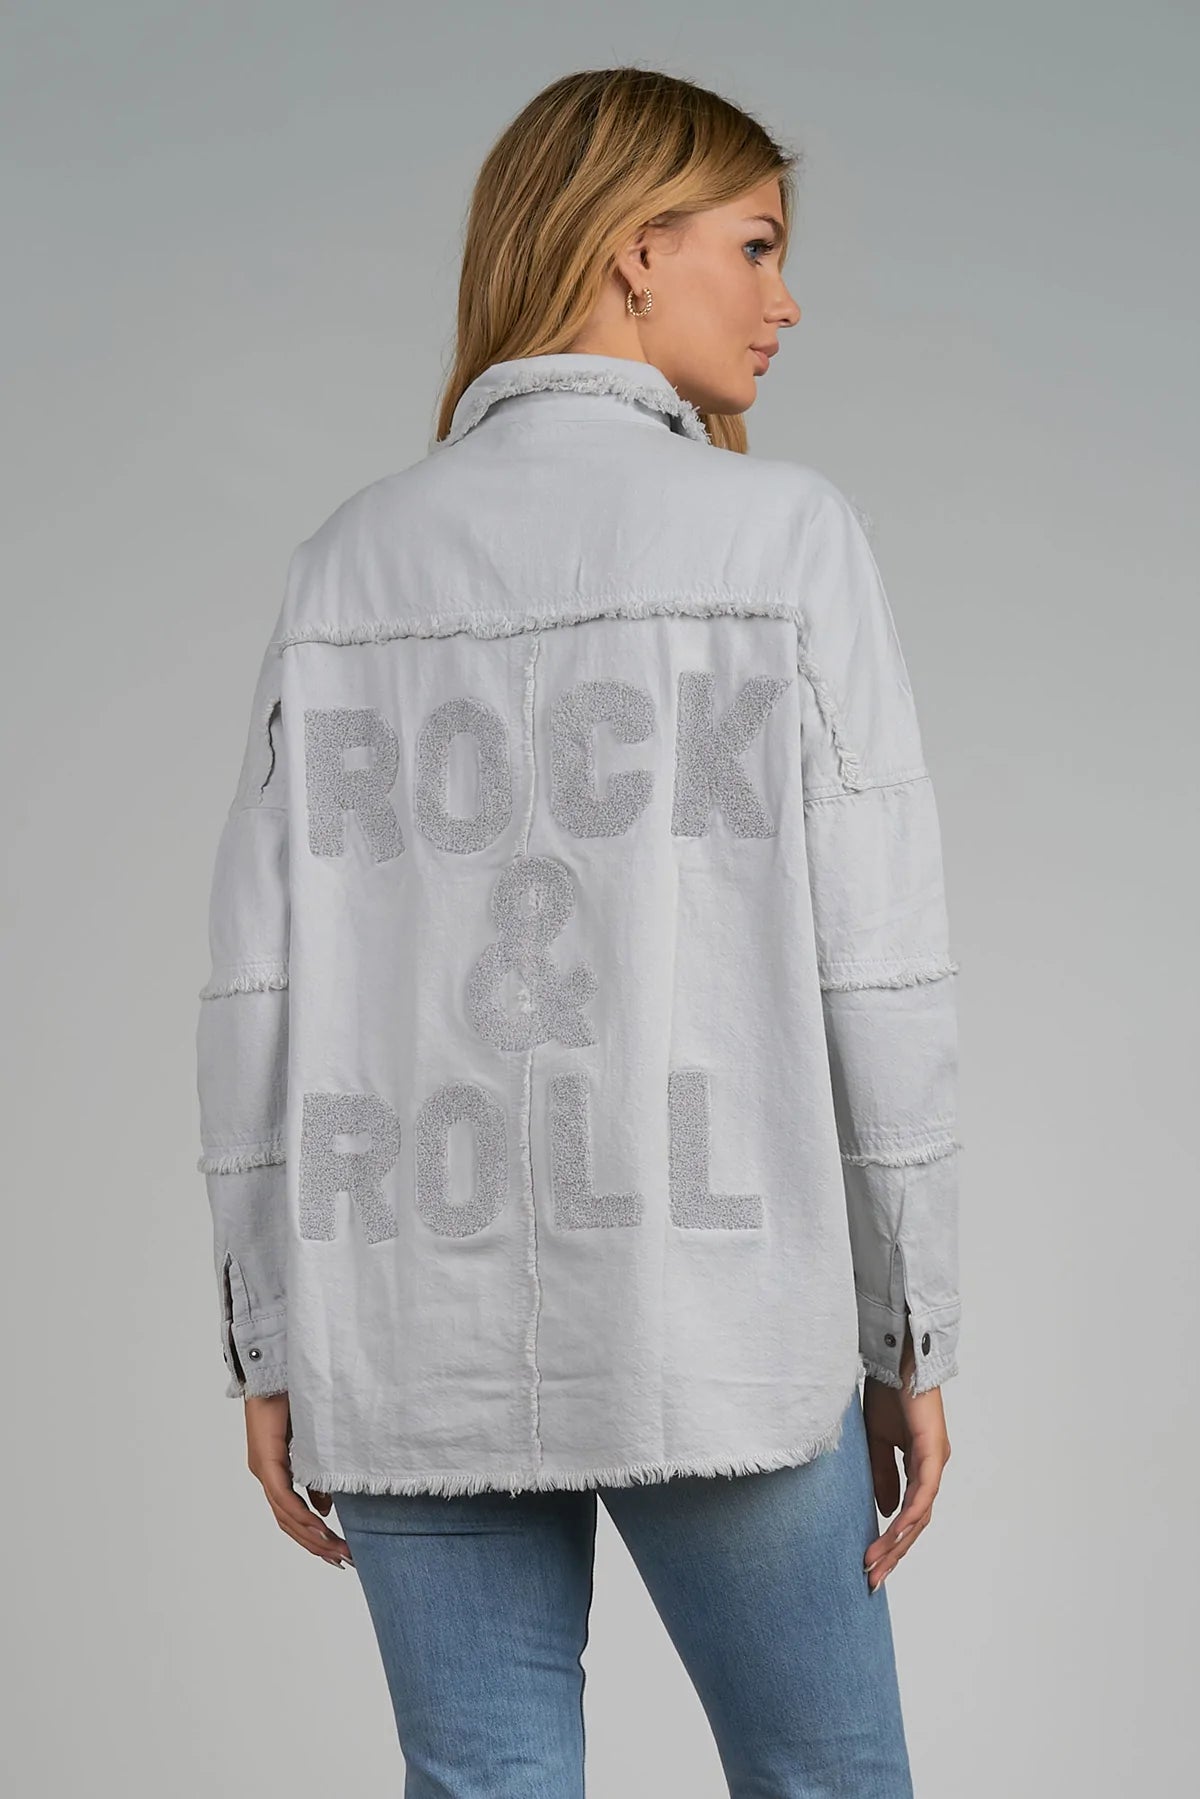 Elan Devan Rock & Roll Jacket